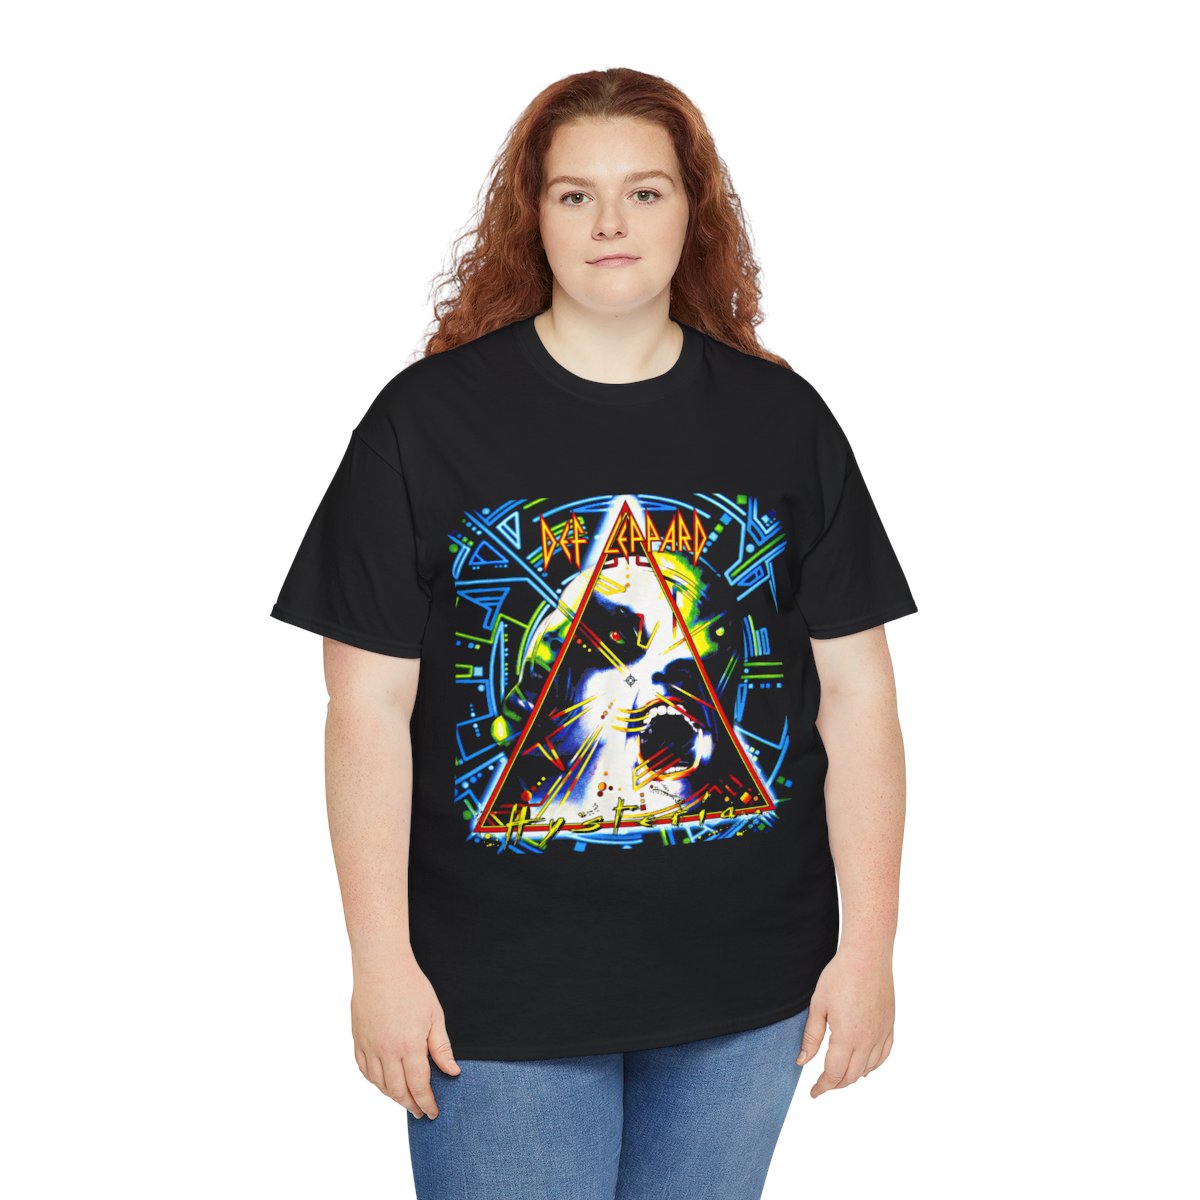 Def Leppard, Hysteria Album Graphic T-Shirt